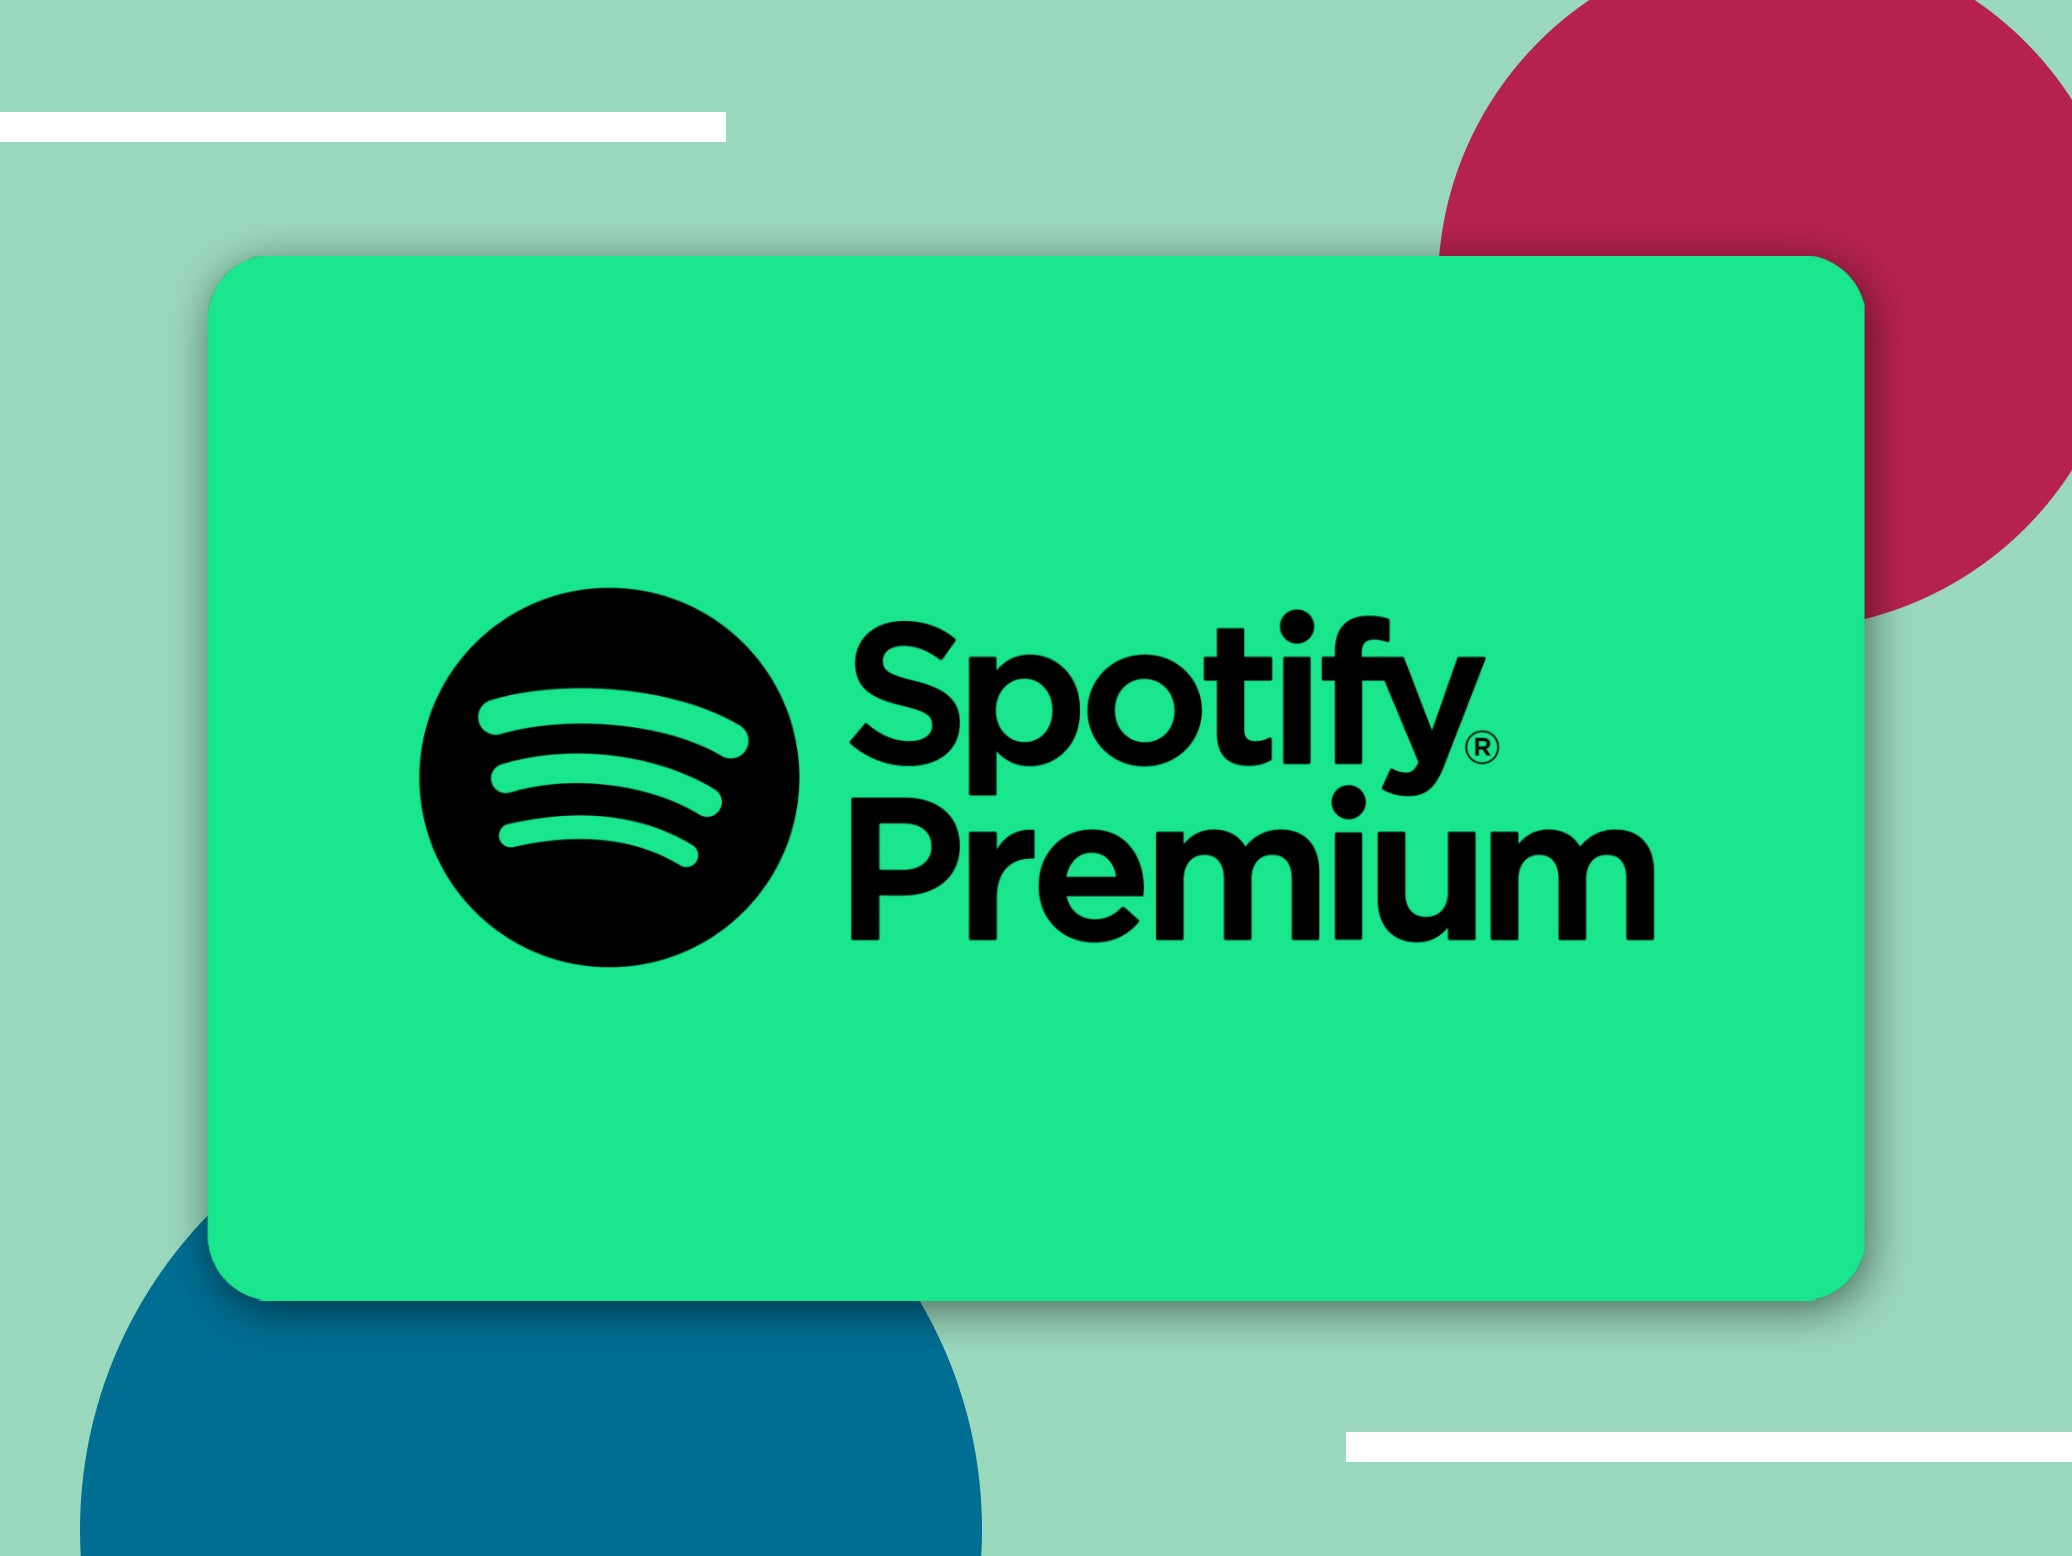 How To Change Spotify Premium Plan 